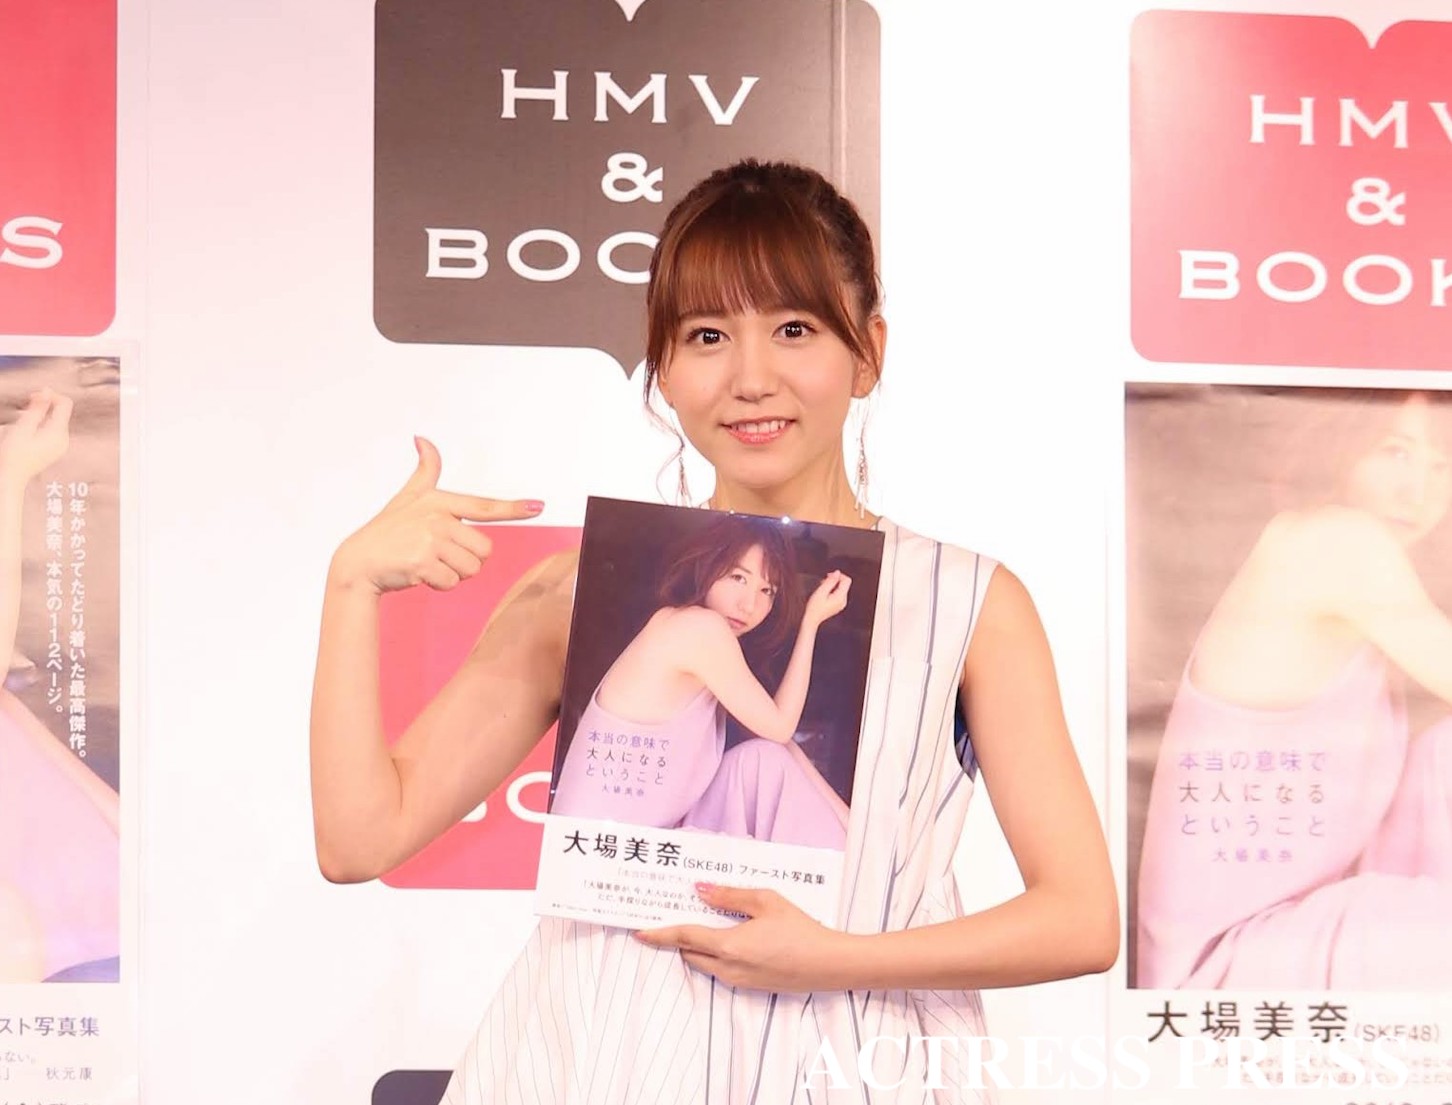 大場美奈 Ske48 私史上 最大露出 の1st写真集で 須田 亜香里と勝負 Actress Press